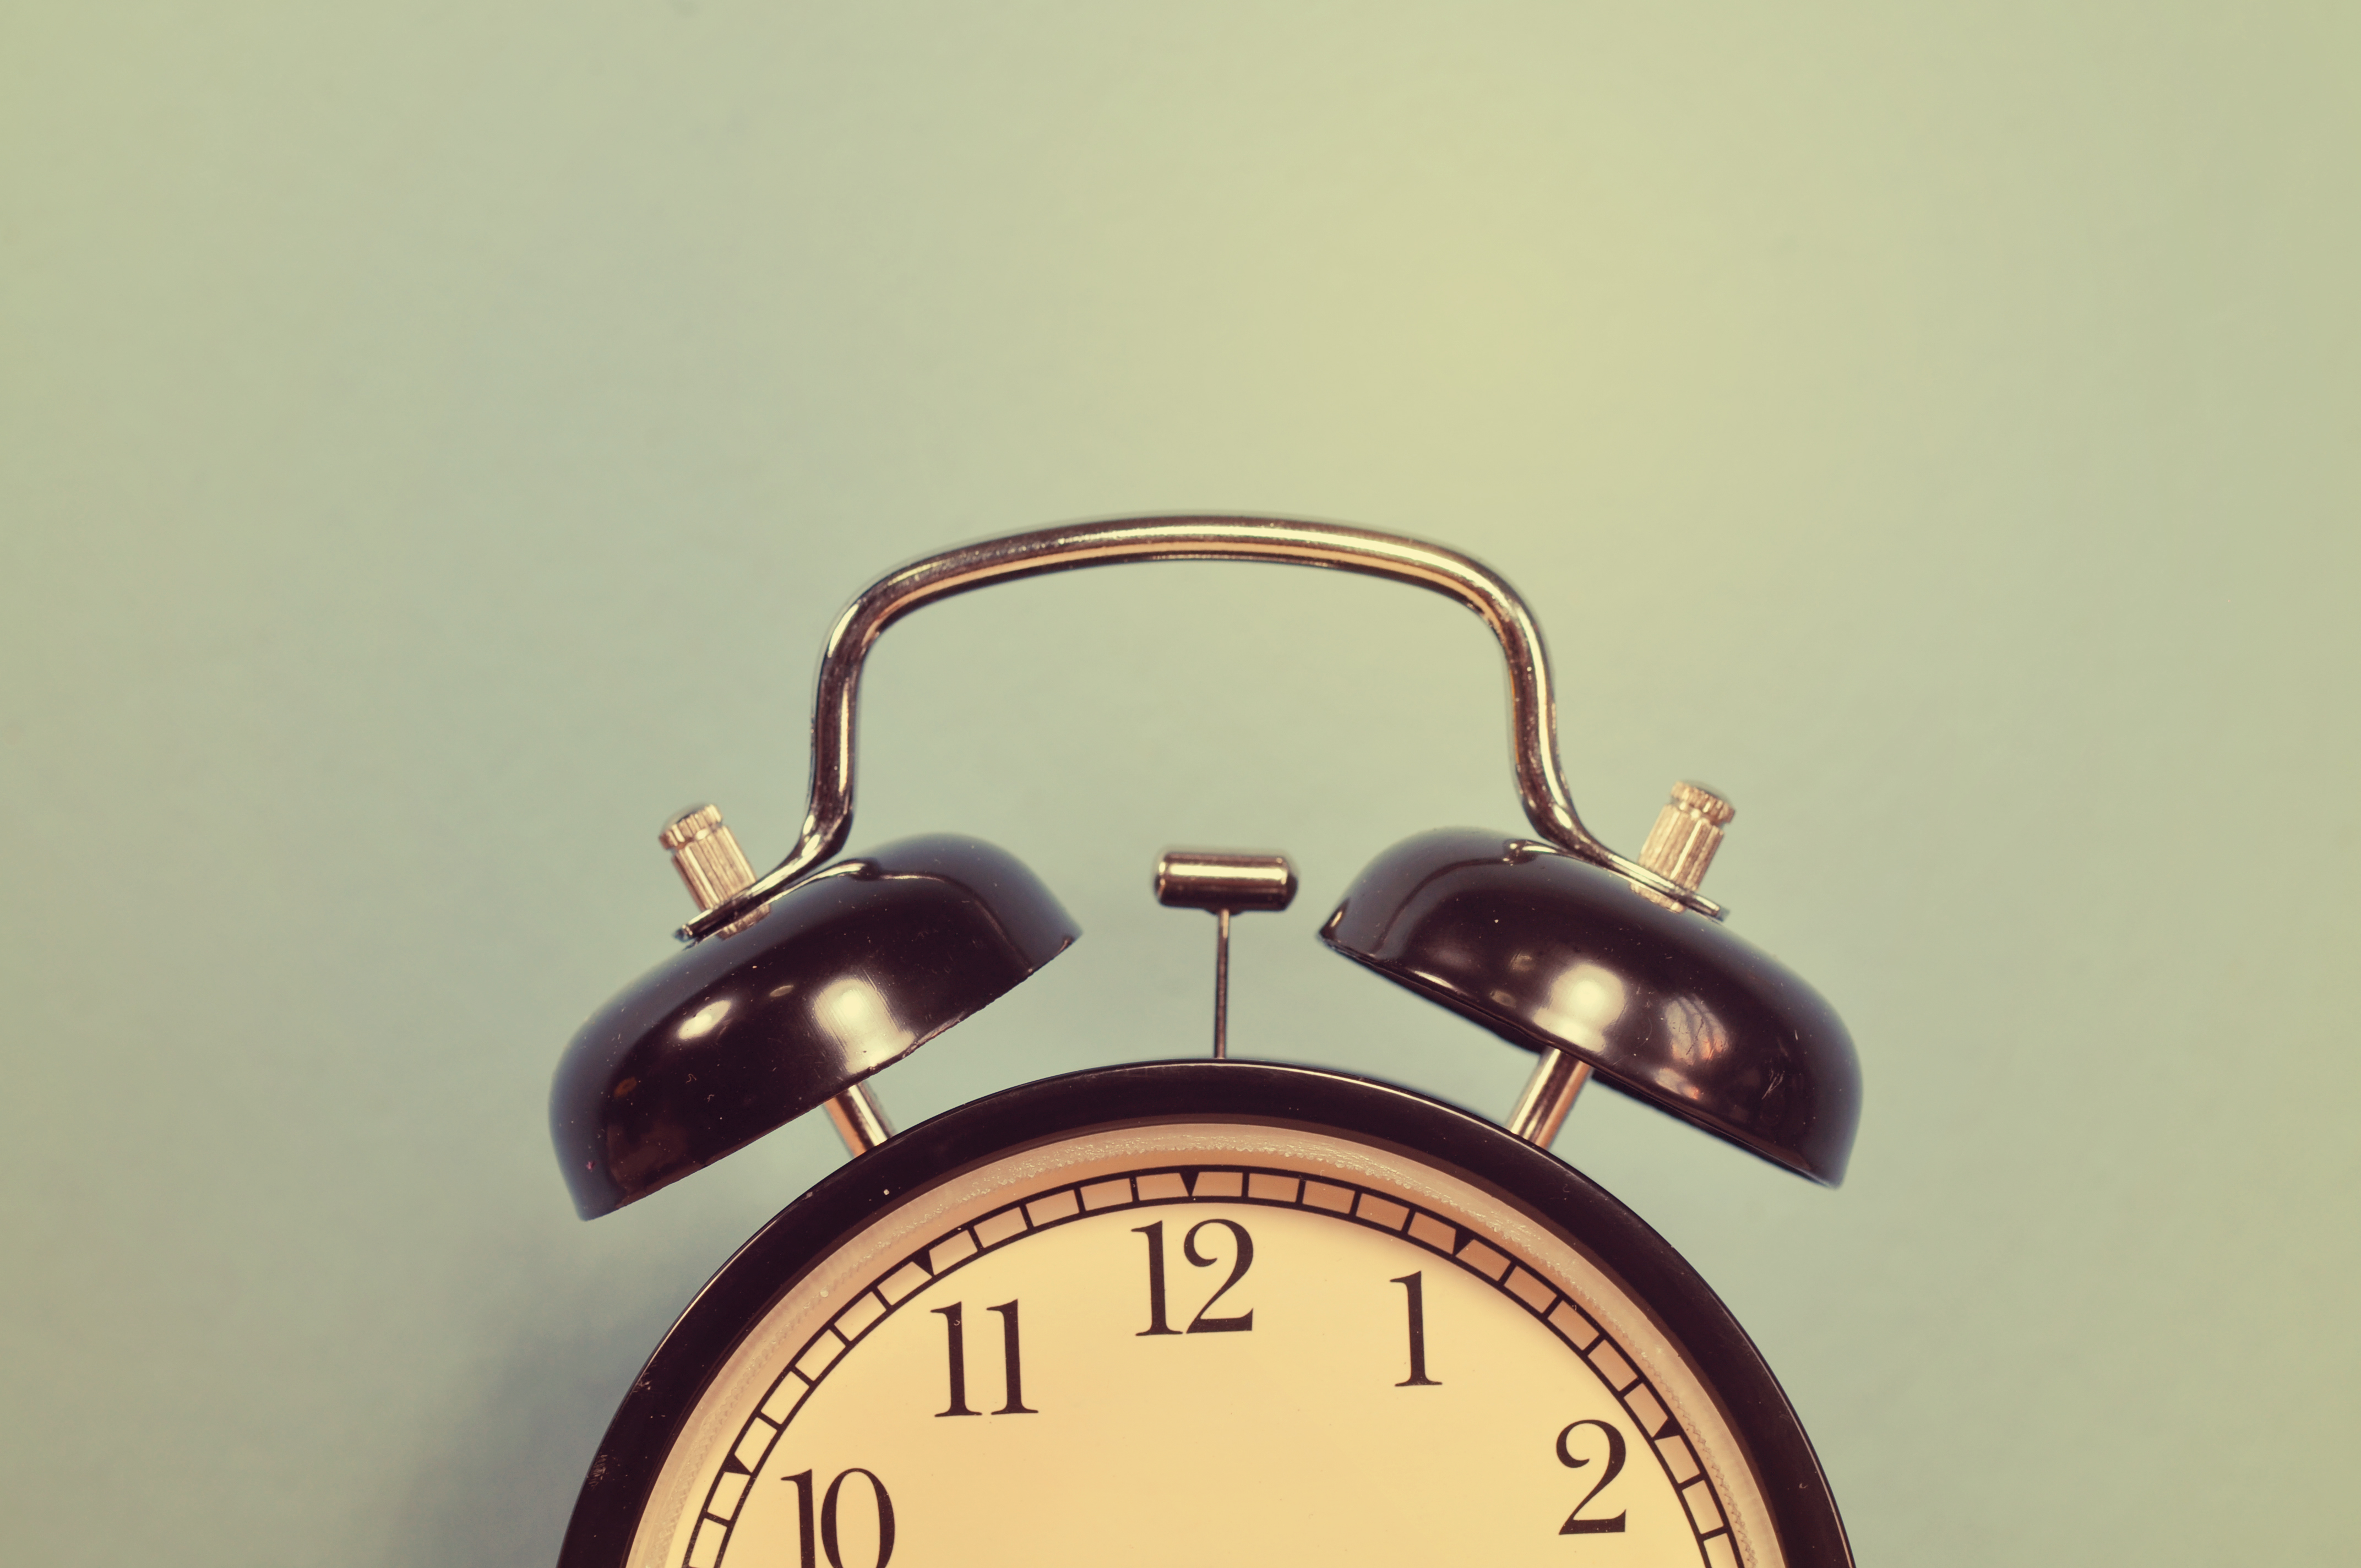 old fashioned alarm clock that plays radio channel